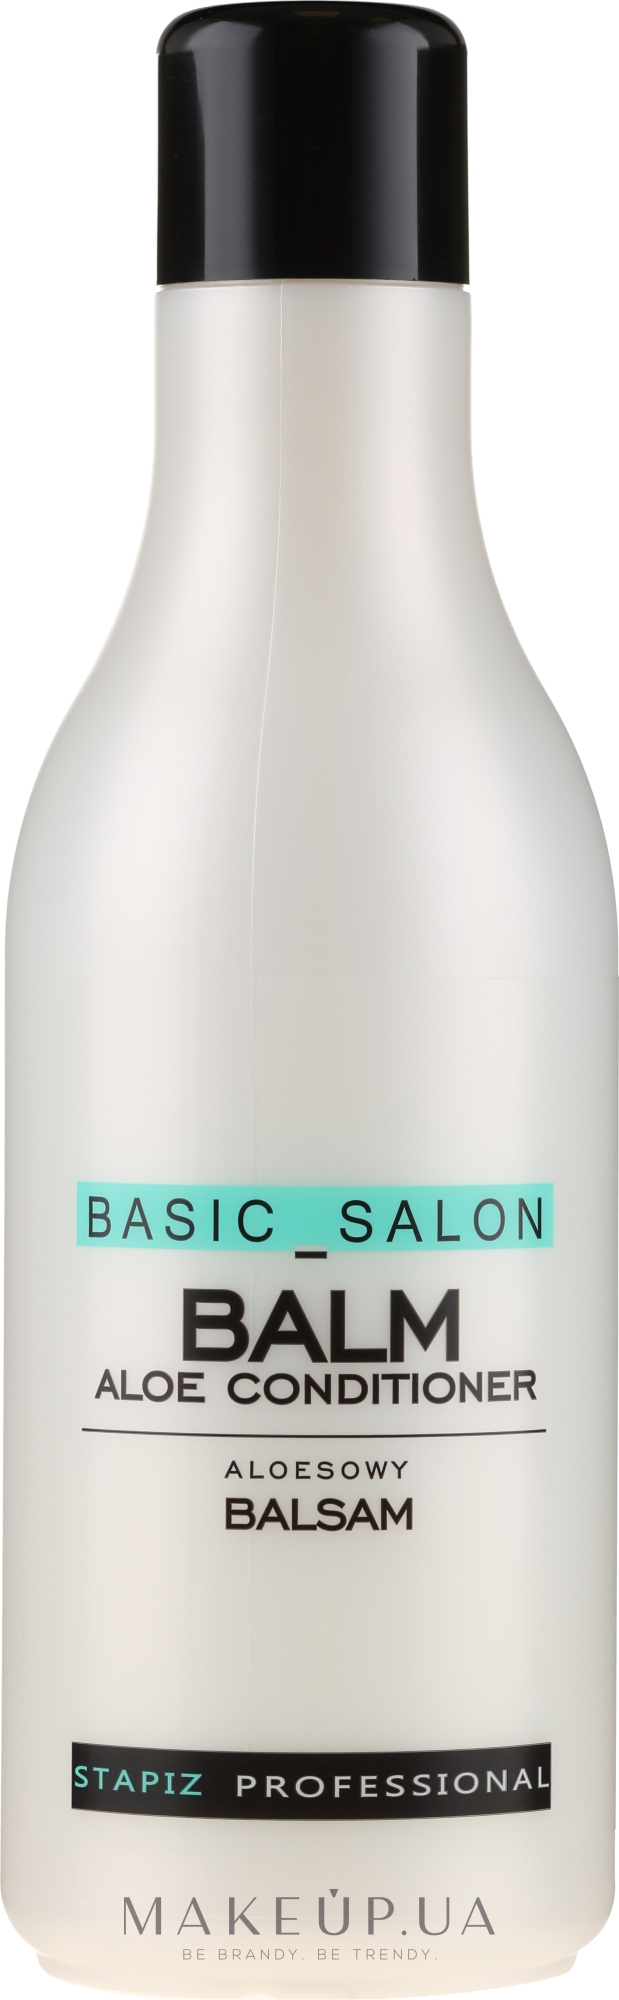 Бальзам для волос - Stapiz Professional Basic Salon Aloe Conditioner Balm — фото 1000ml